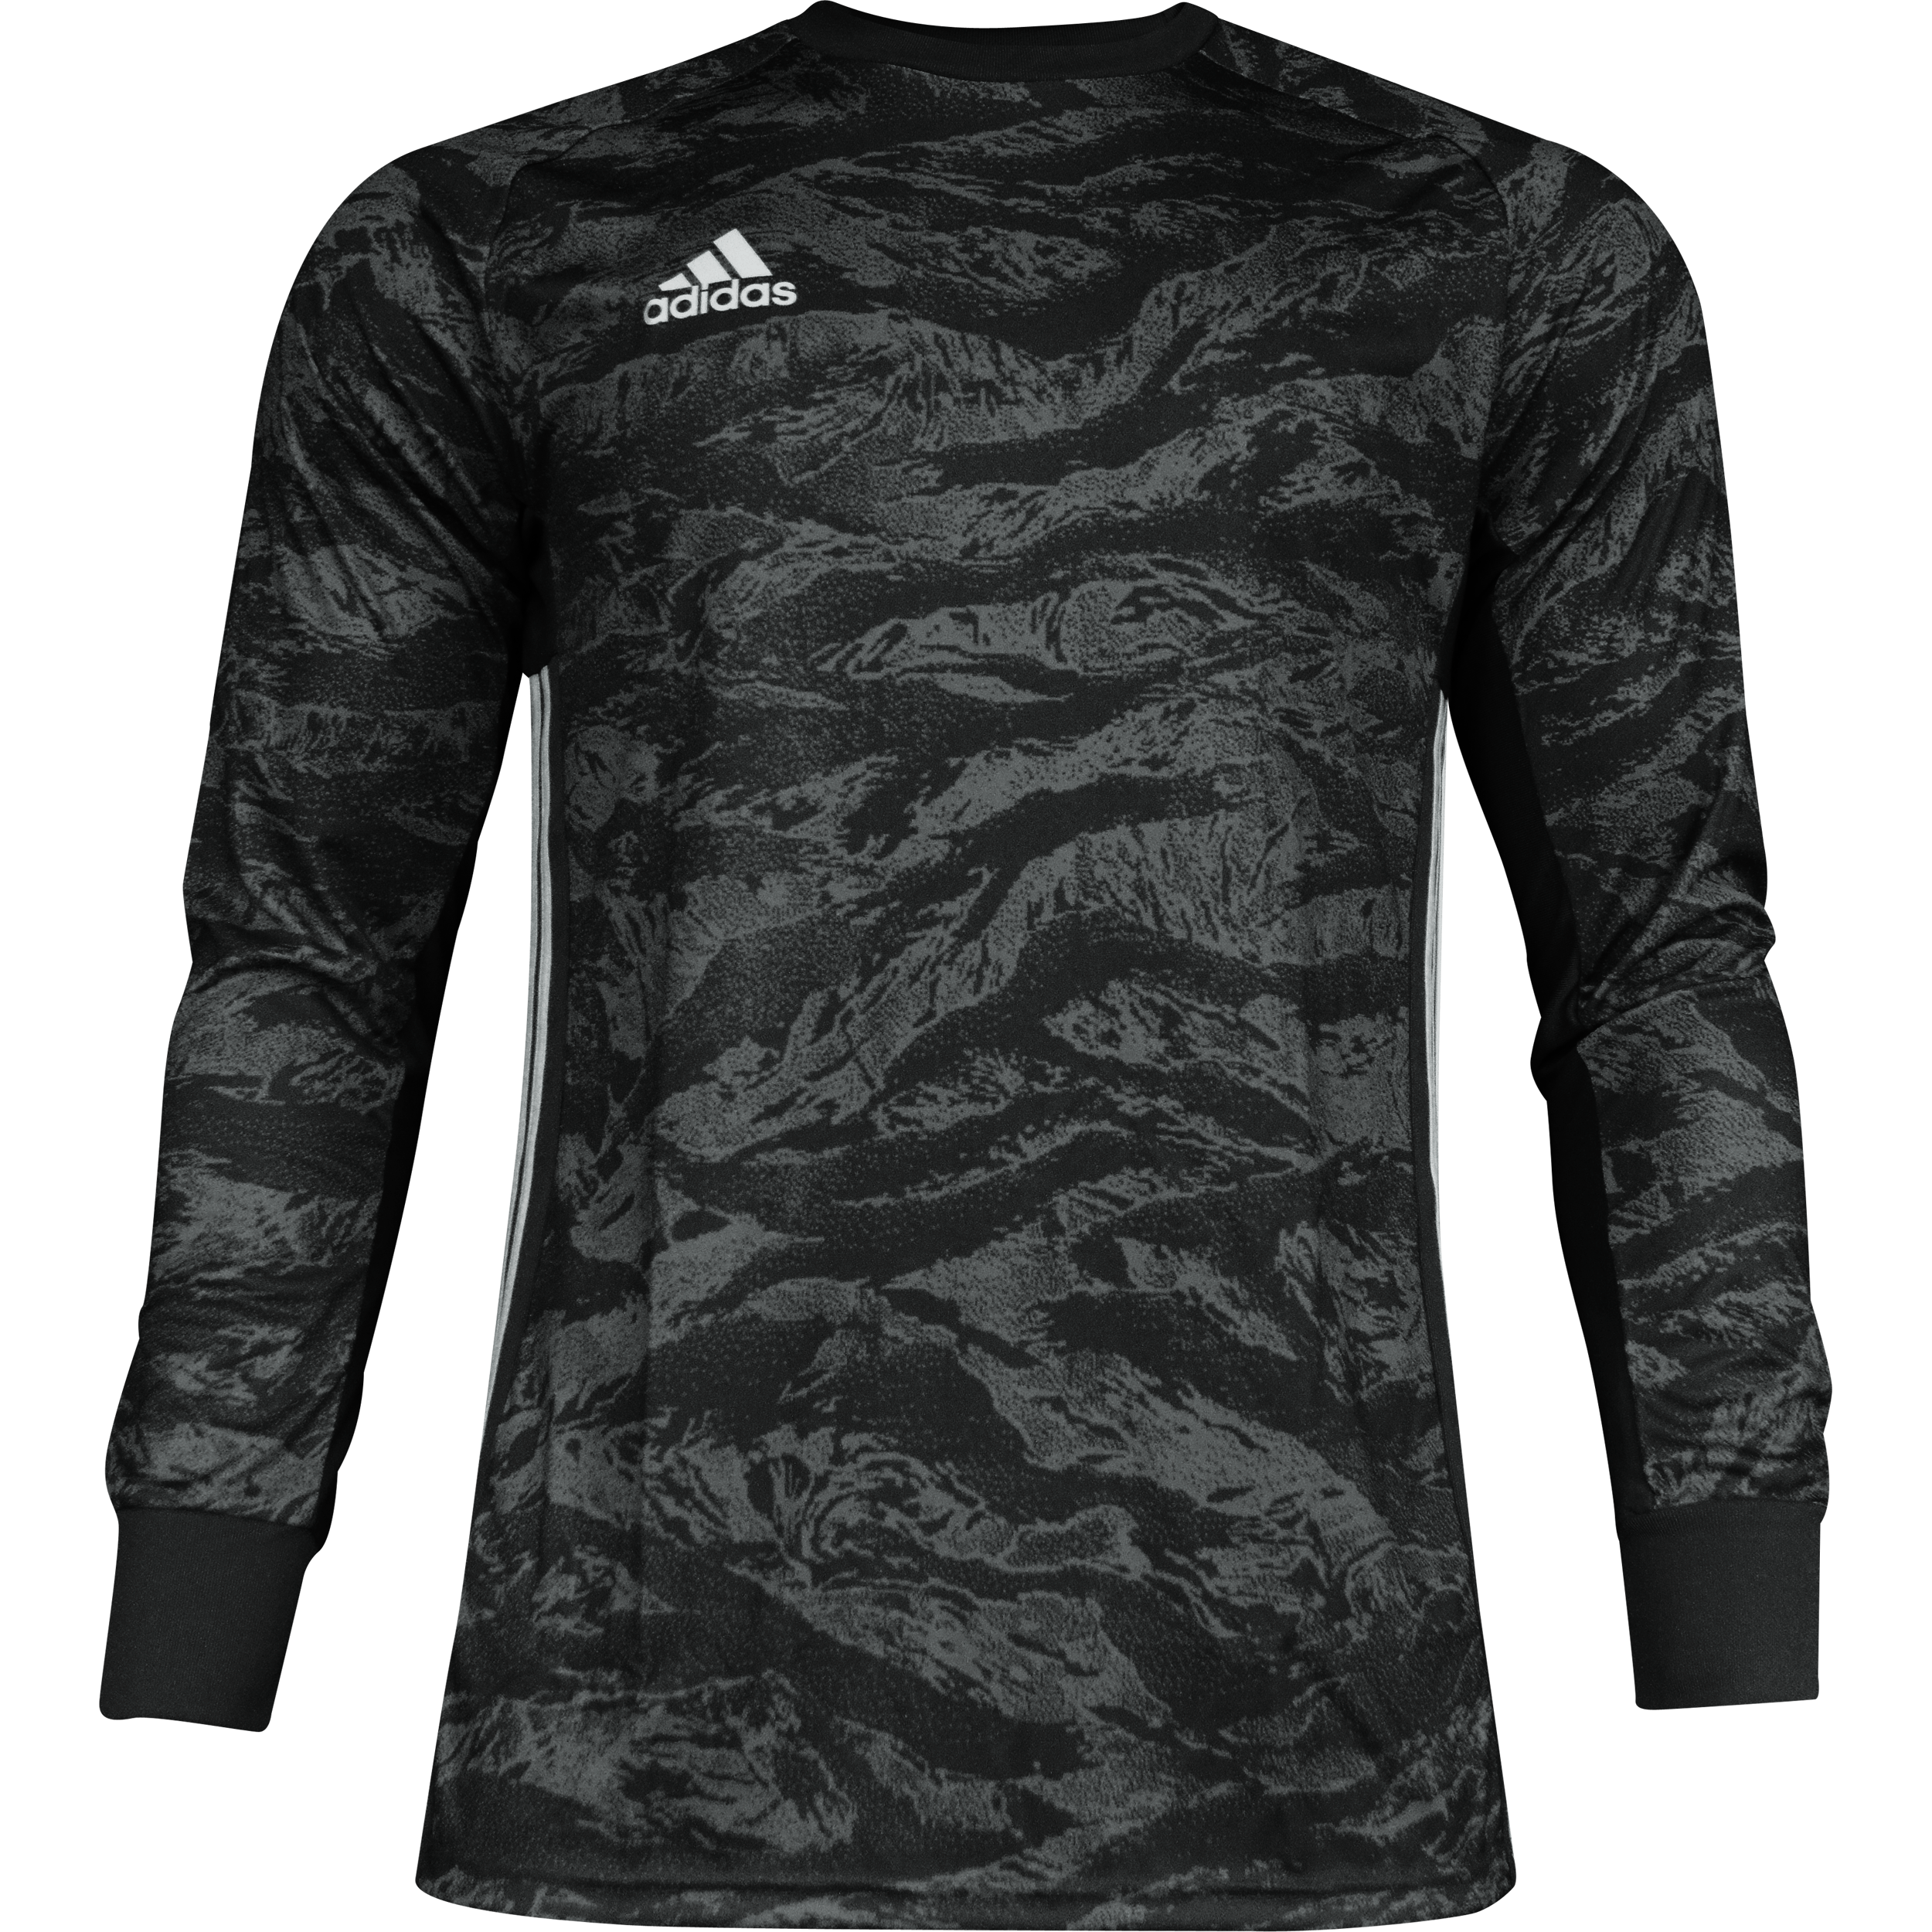 adidas 19 GK-Shirt l/s Black